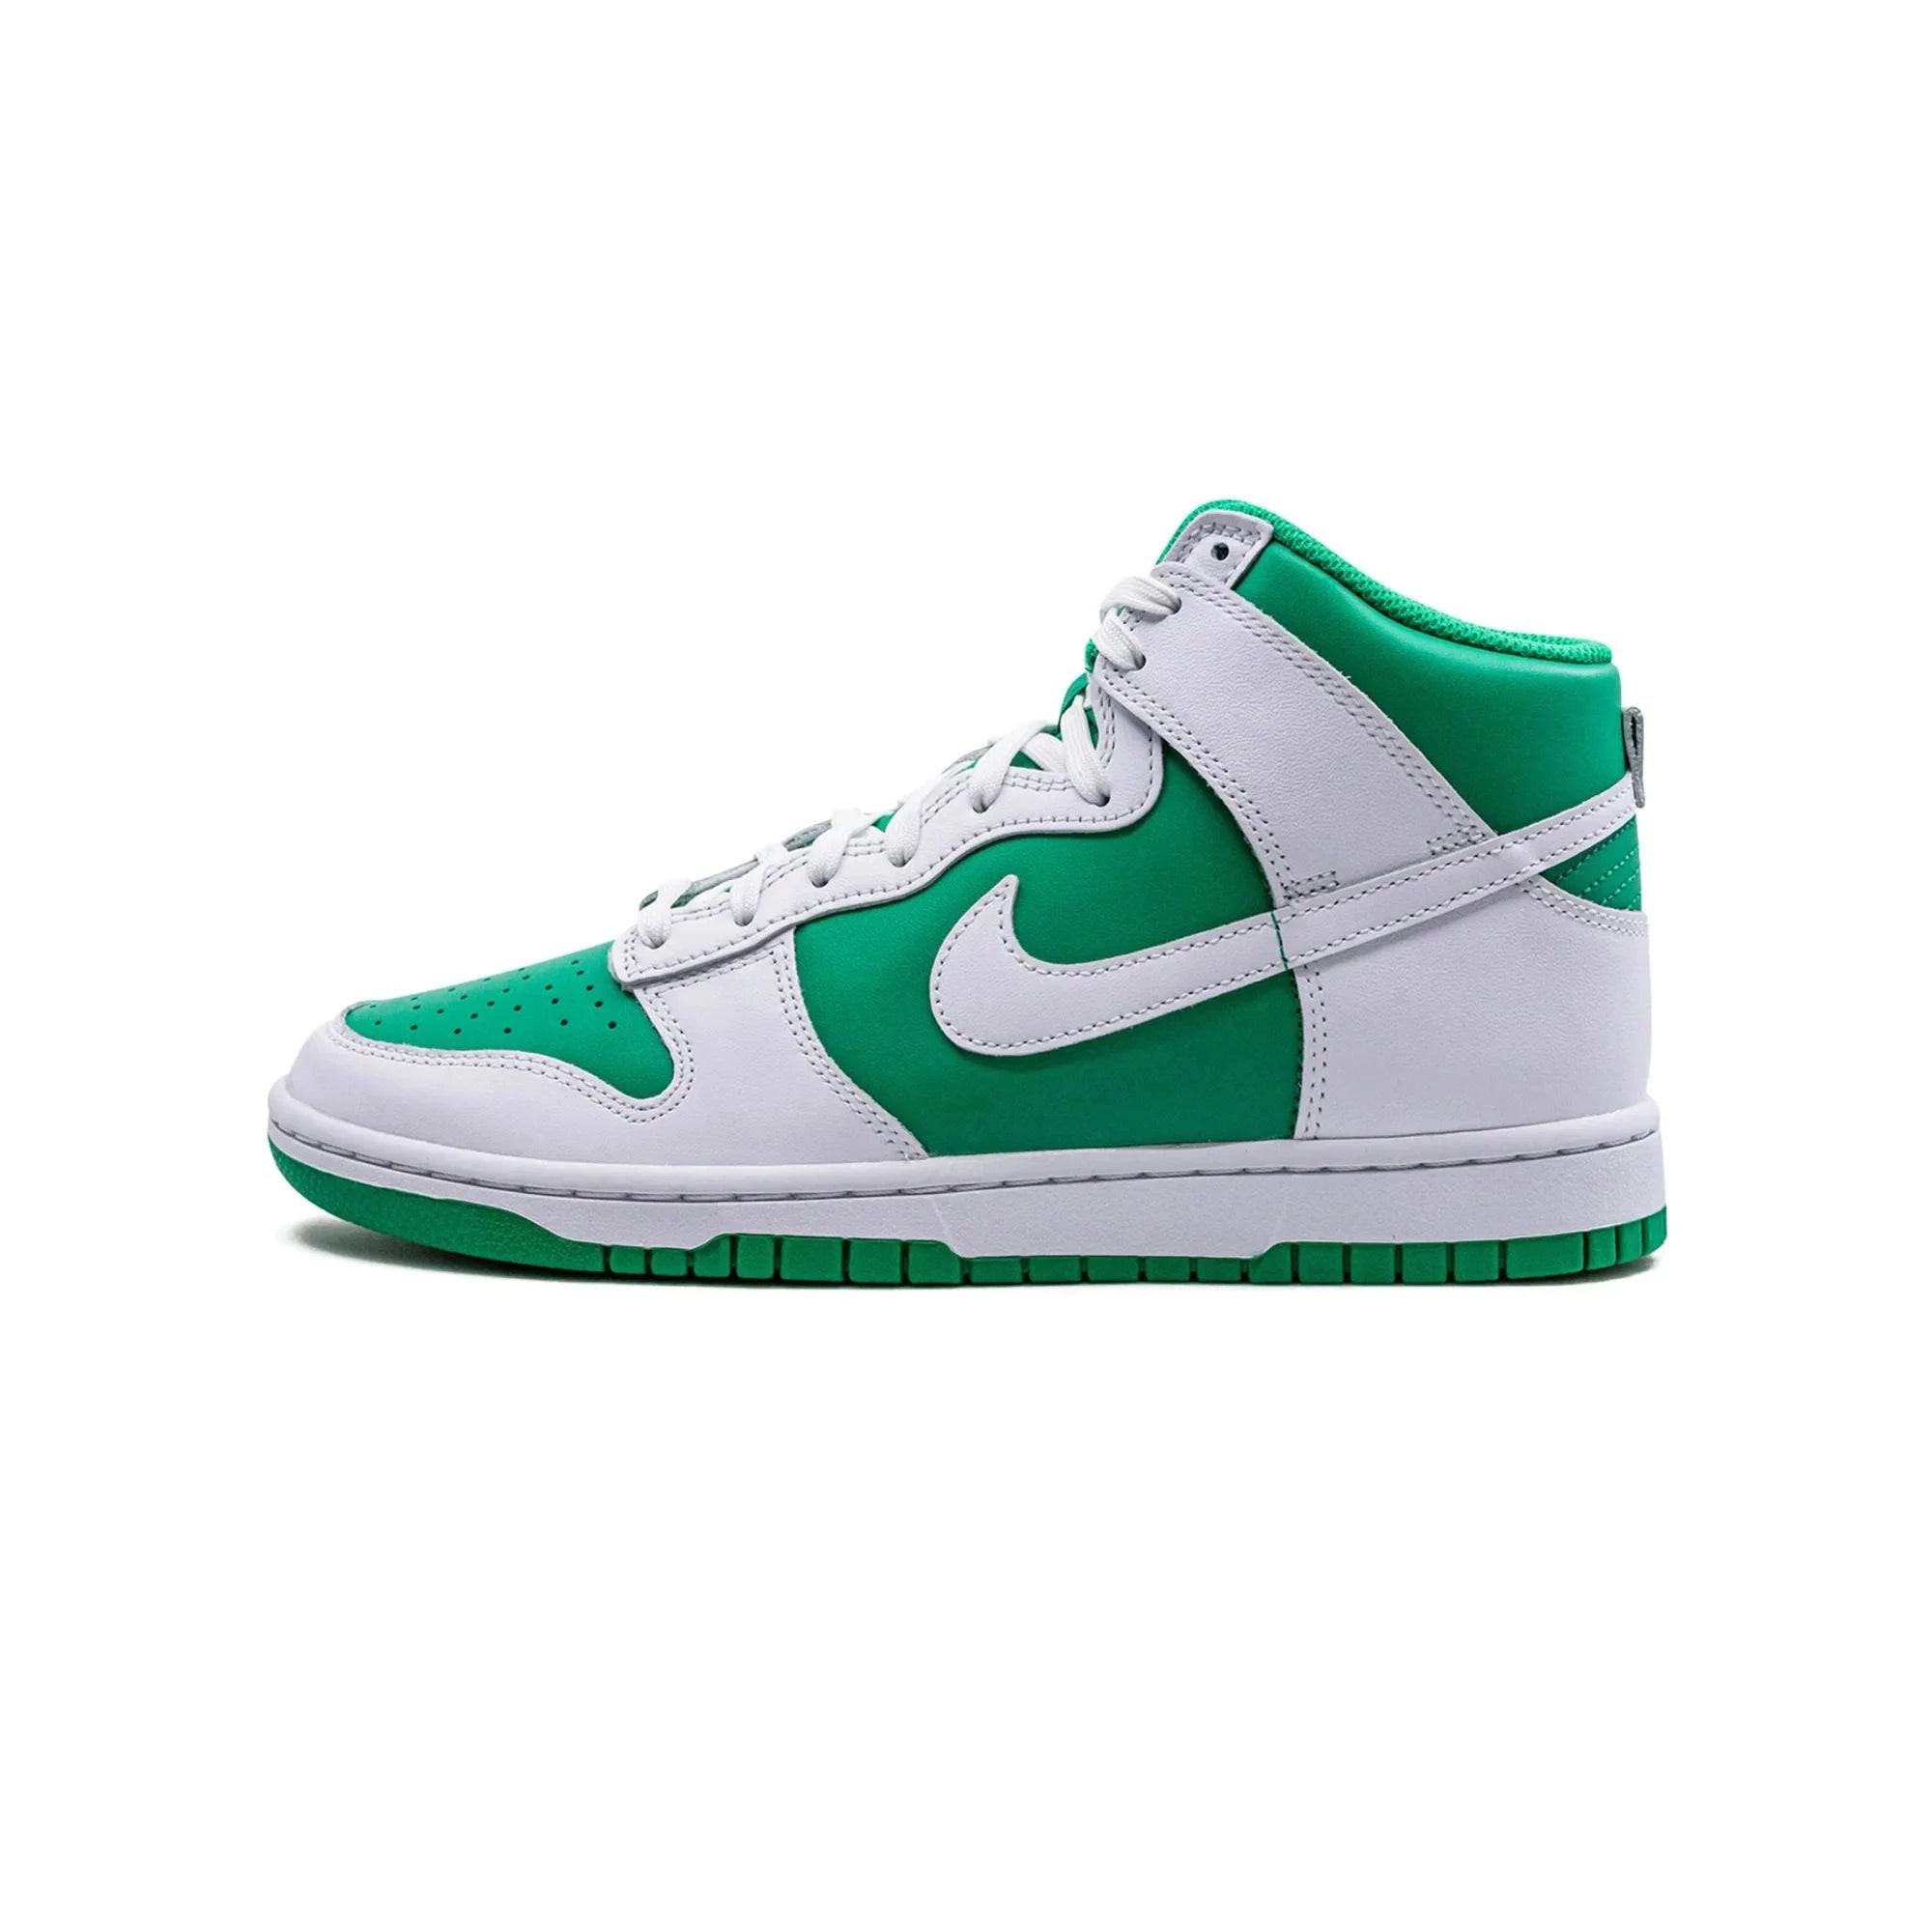 Men's shoes Nike Dunk High Retro SE Phantom/ Stadium Green-Sail-Black